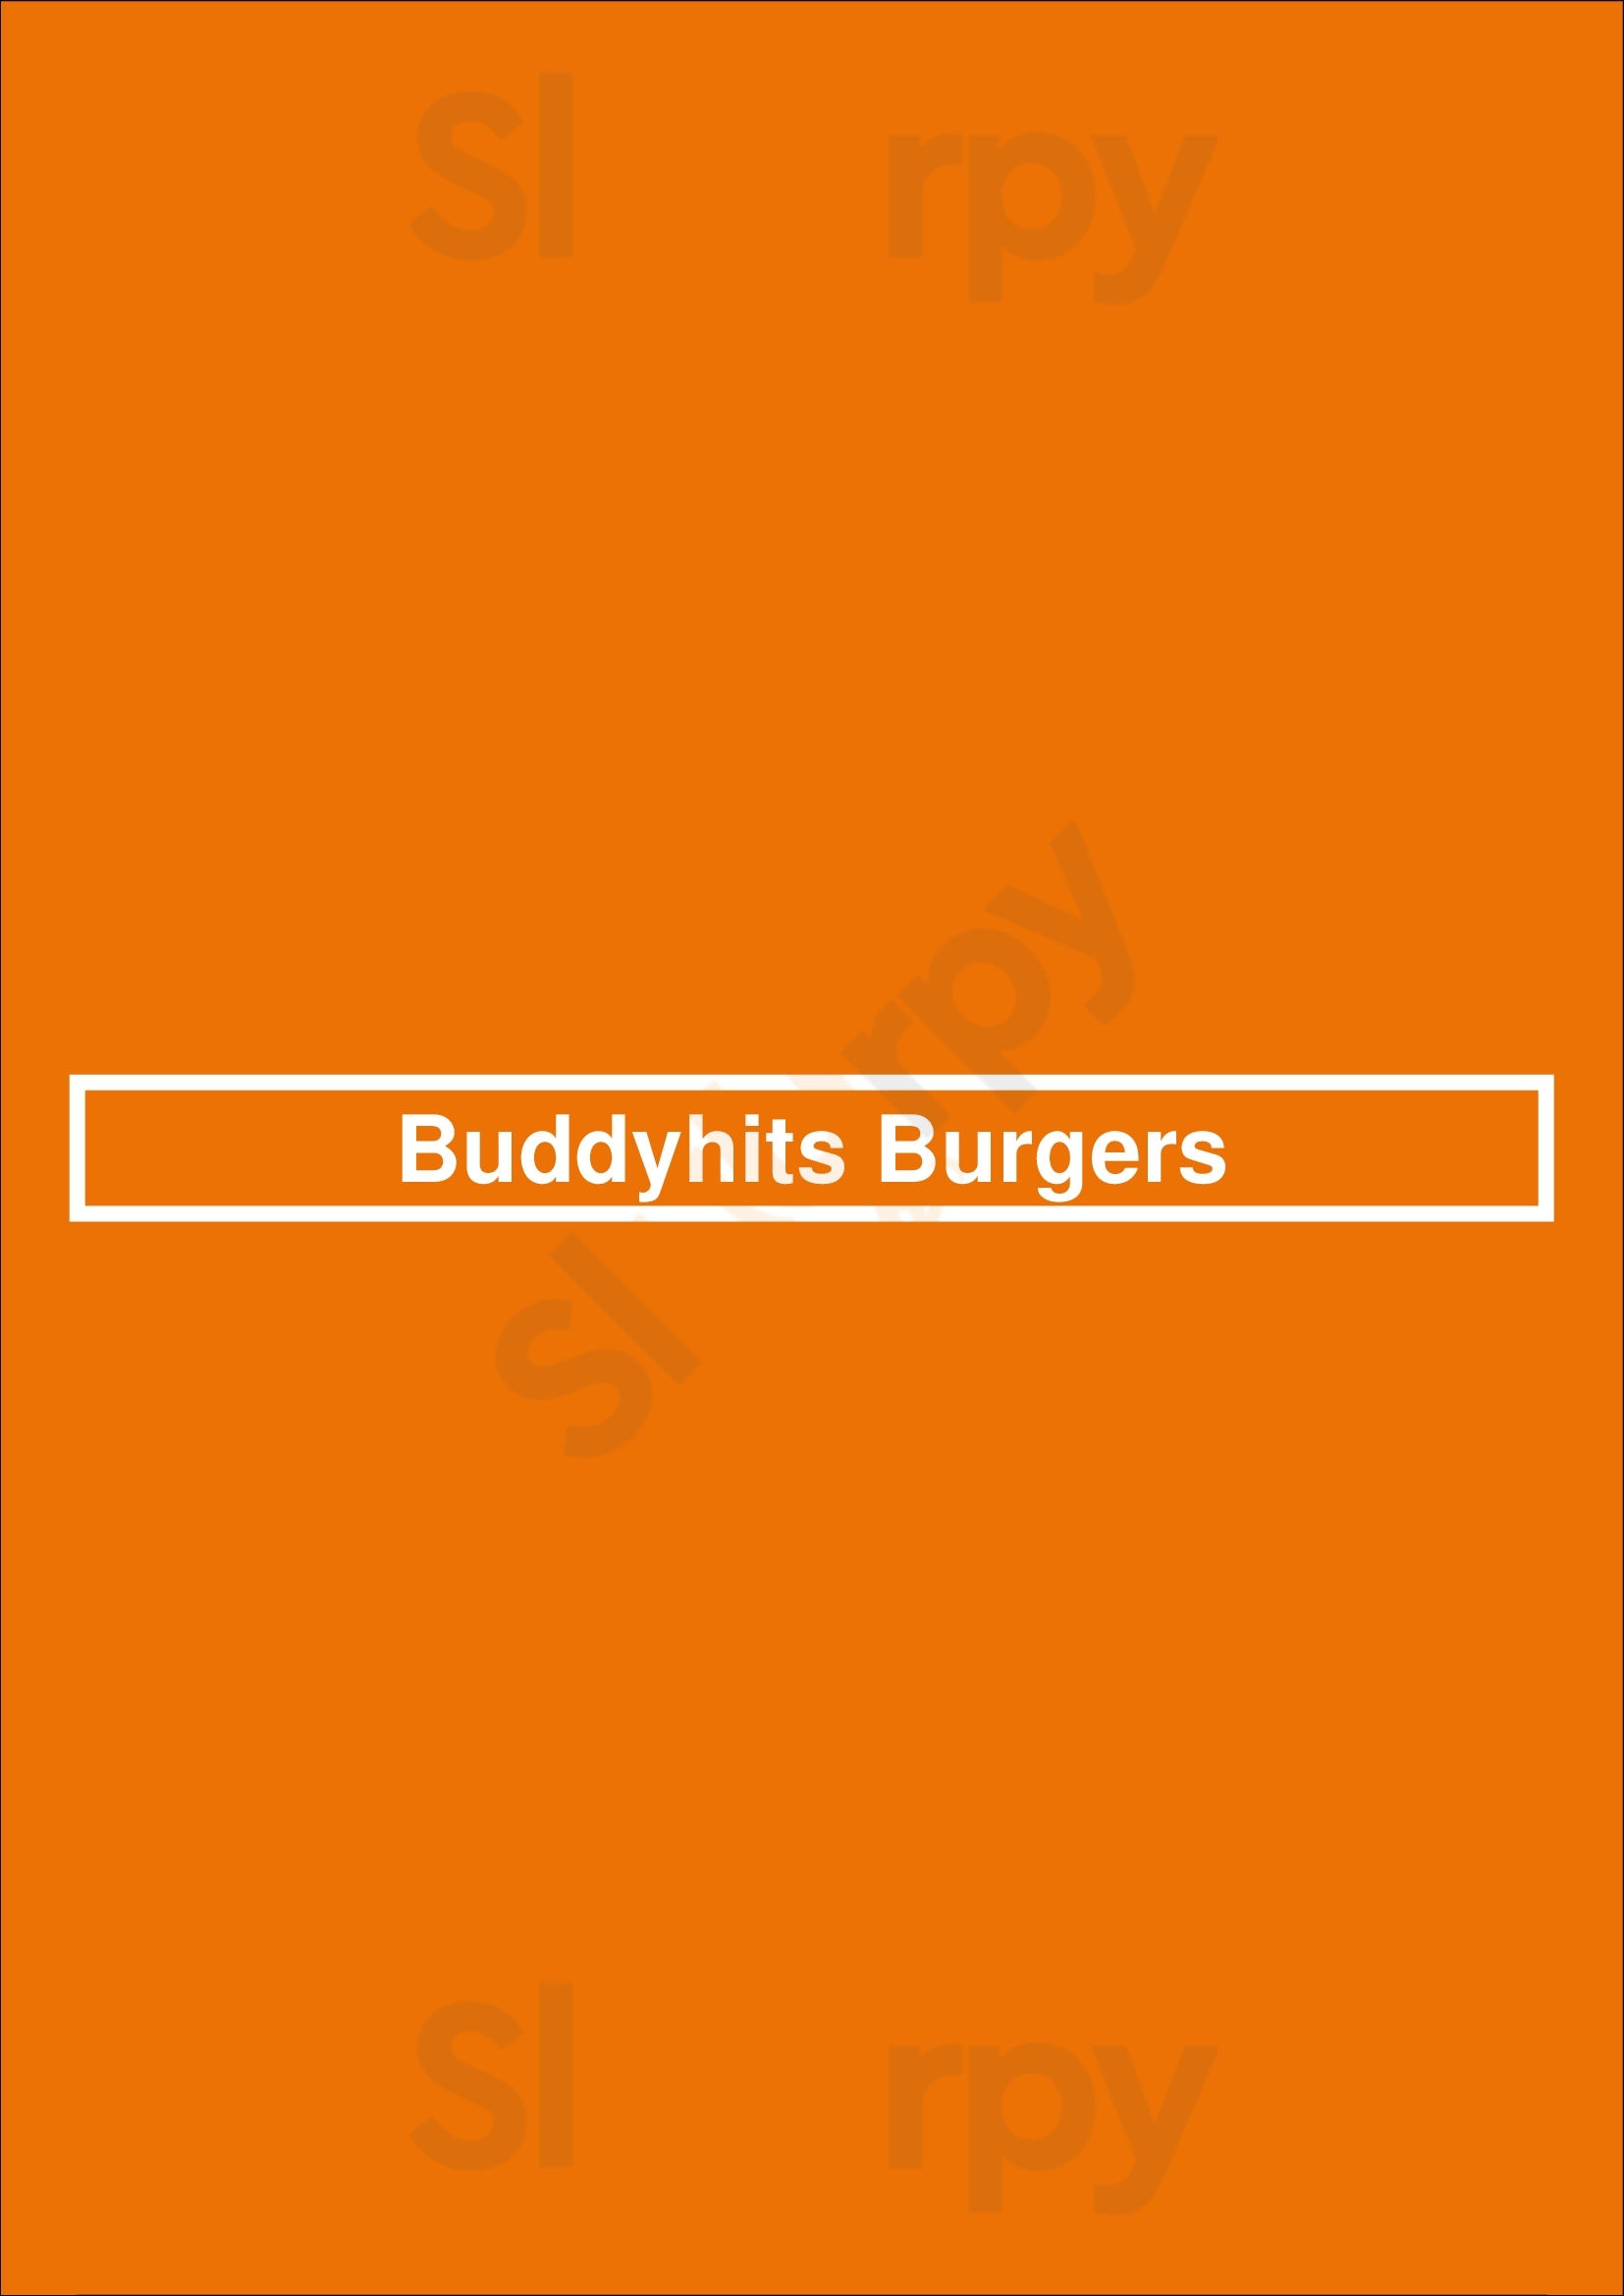 Buddyhits Burgers Los Angeles Menu - 1